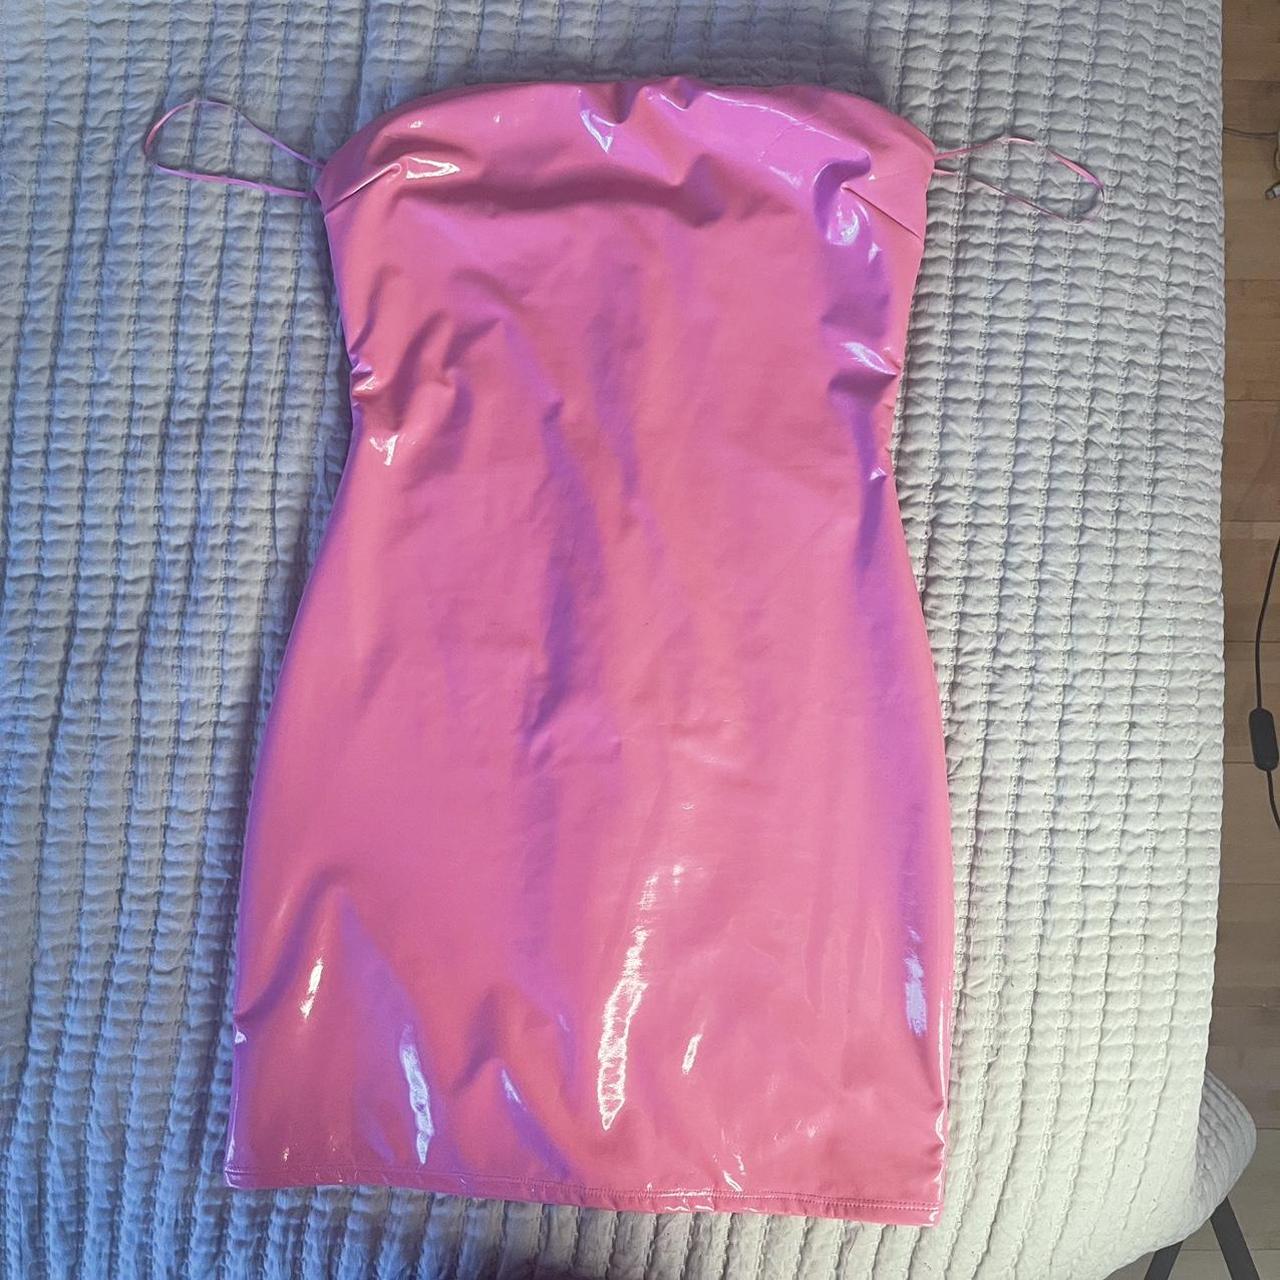 Bubblegum pink vinyl tube dress, Worn once for my